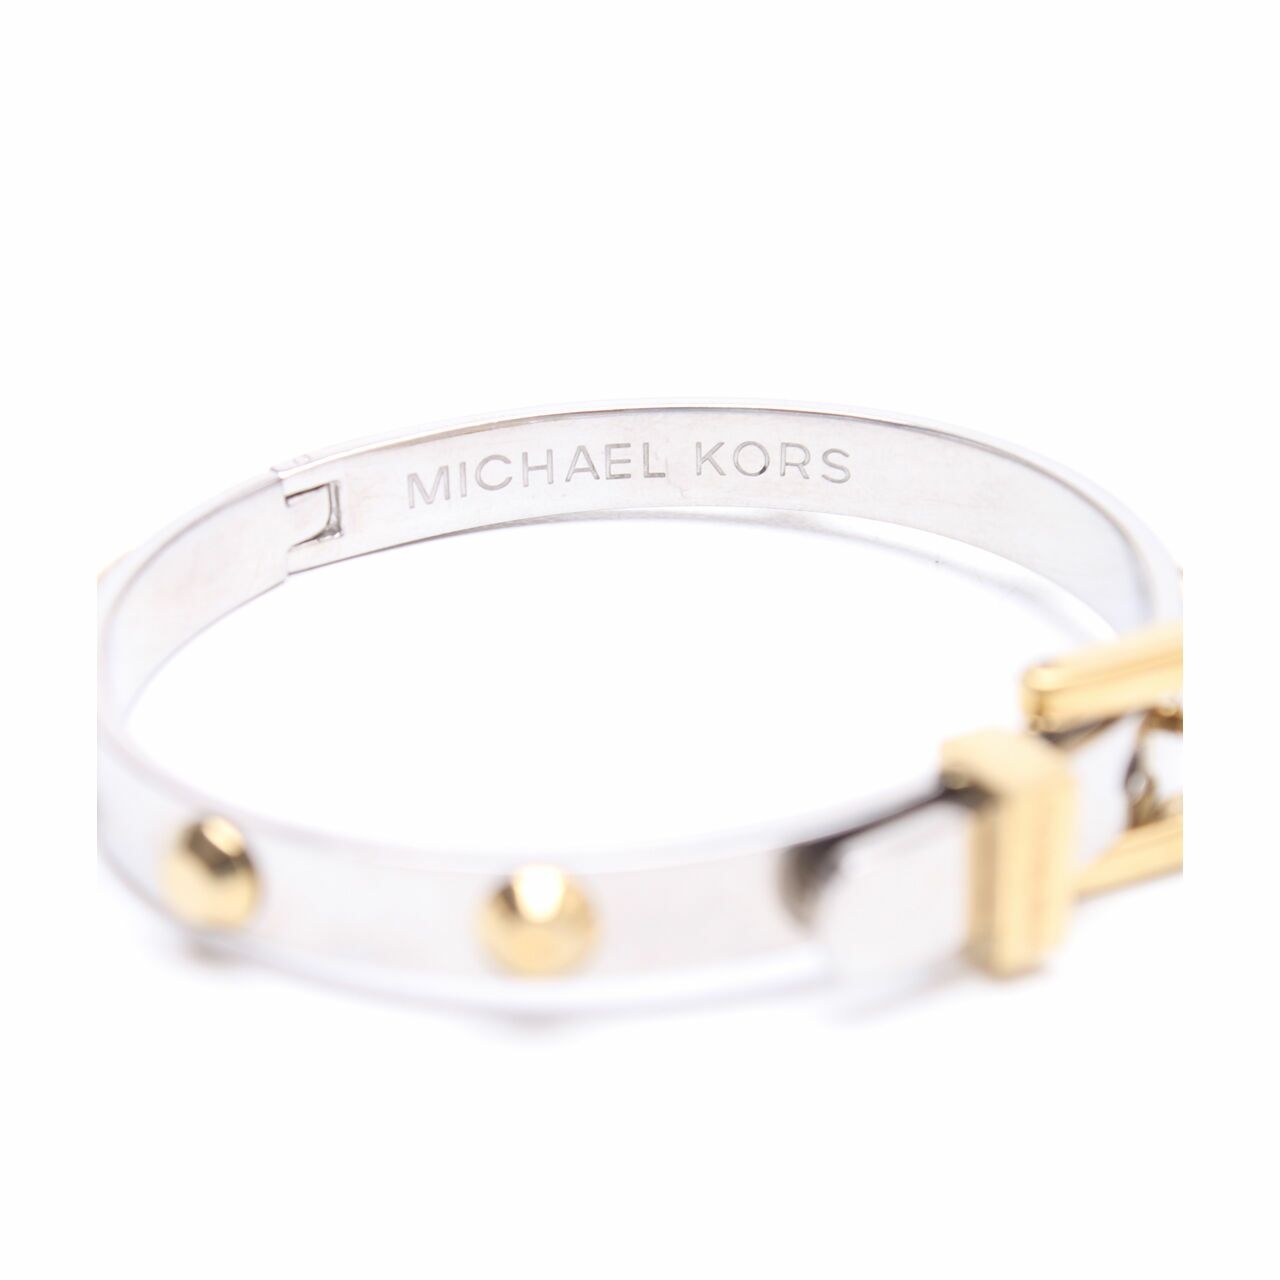 Michael Kors Silver & Gold Astor Two-tone Rivet Buckle Bangle Bracelet Jewelry